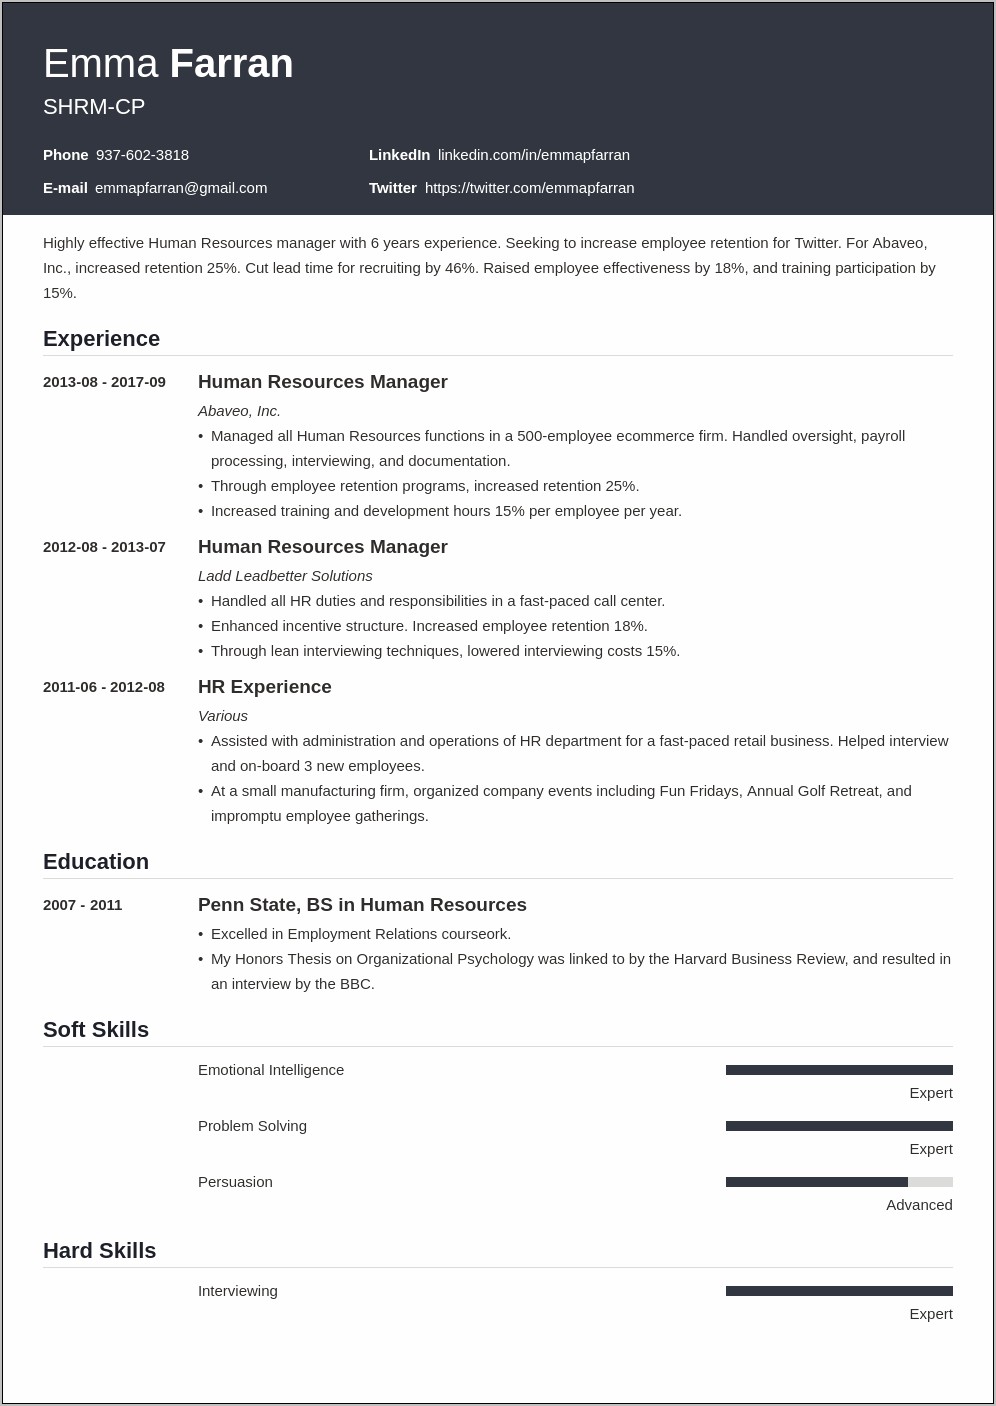 Resume Job Description Examples For Human Resource